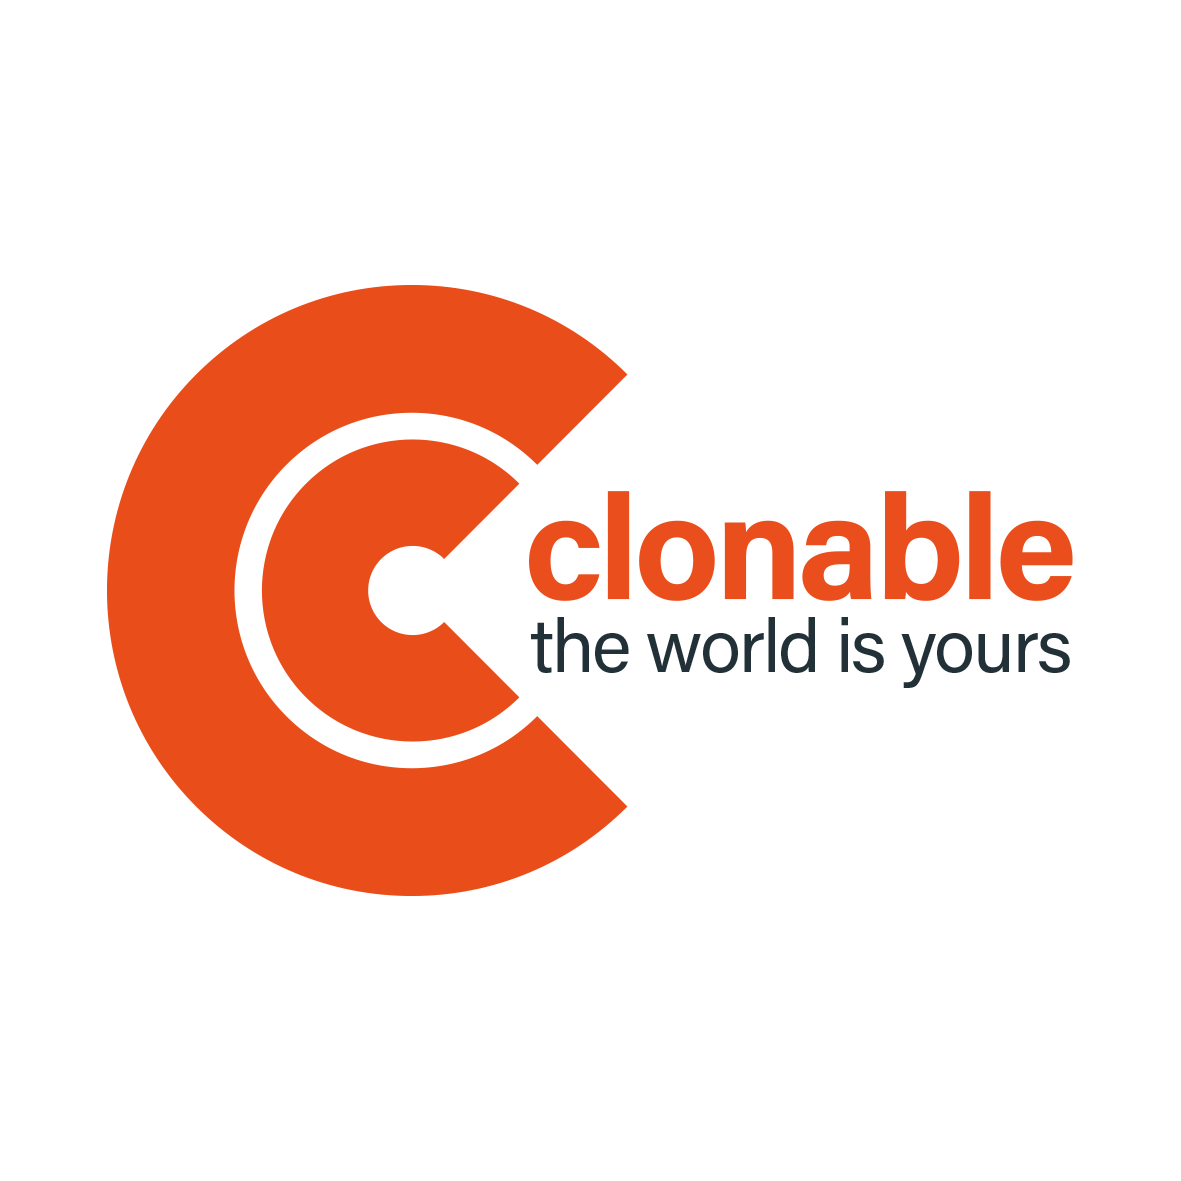 Clonable logo so sloganom na svetlom pozadí